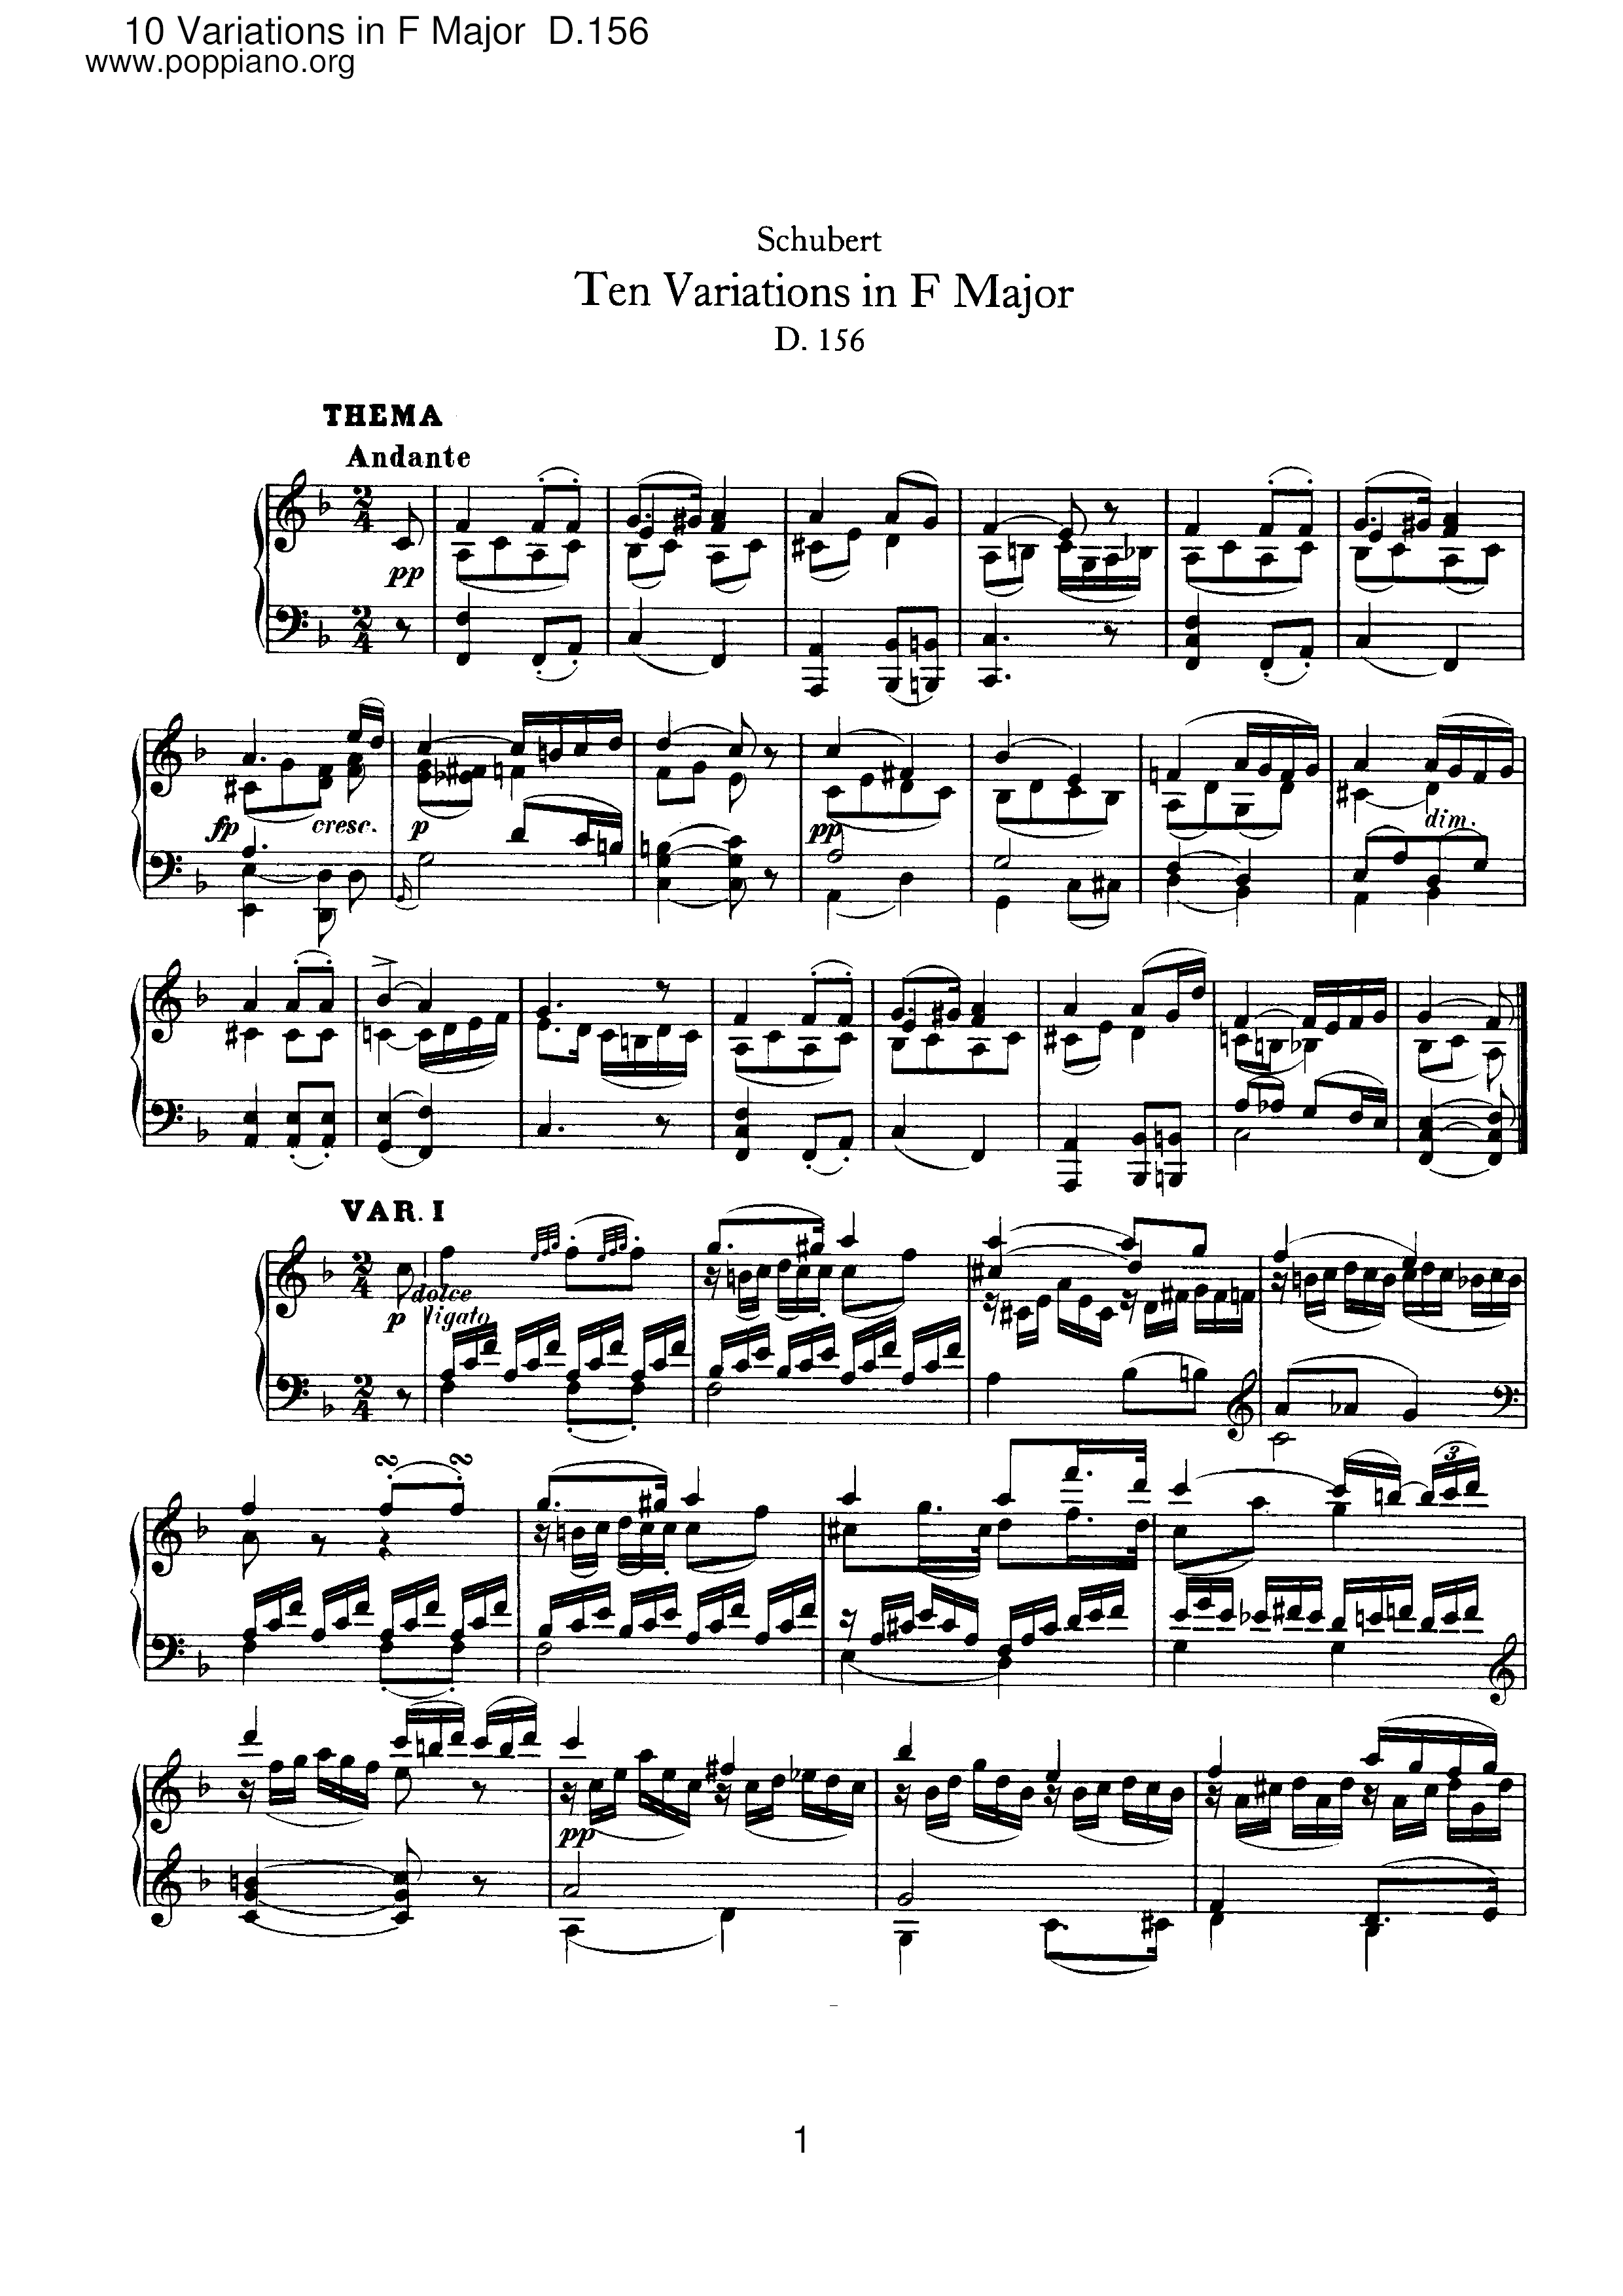 10 Variations in F major, D.156ピアノ譜